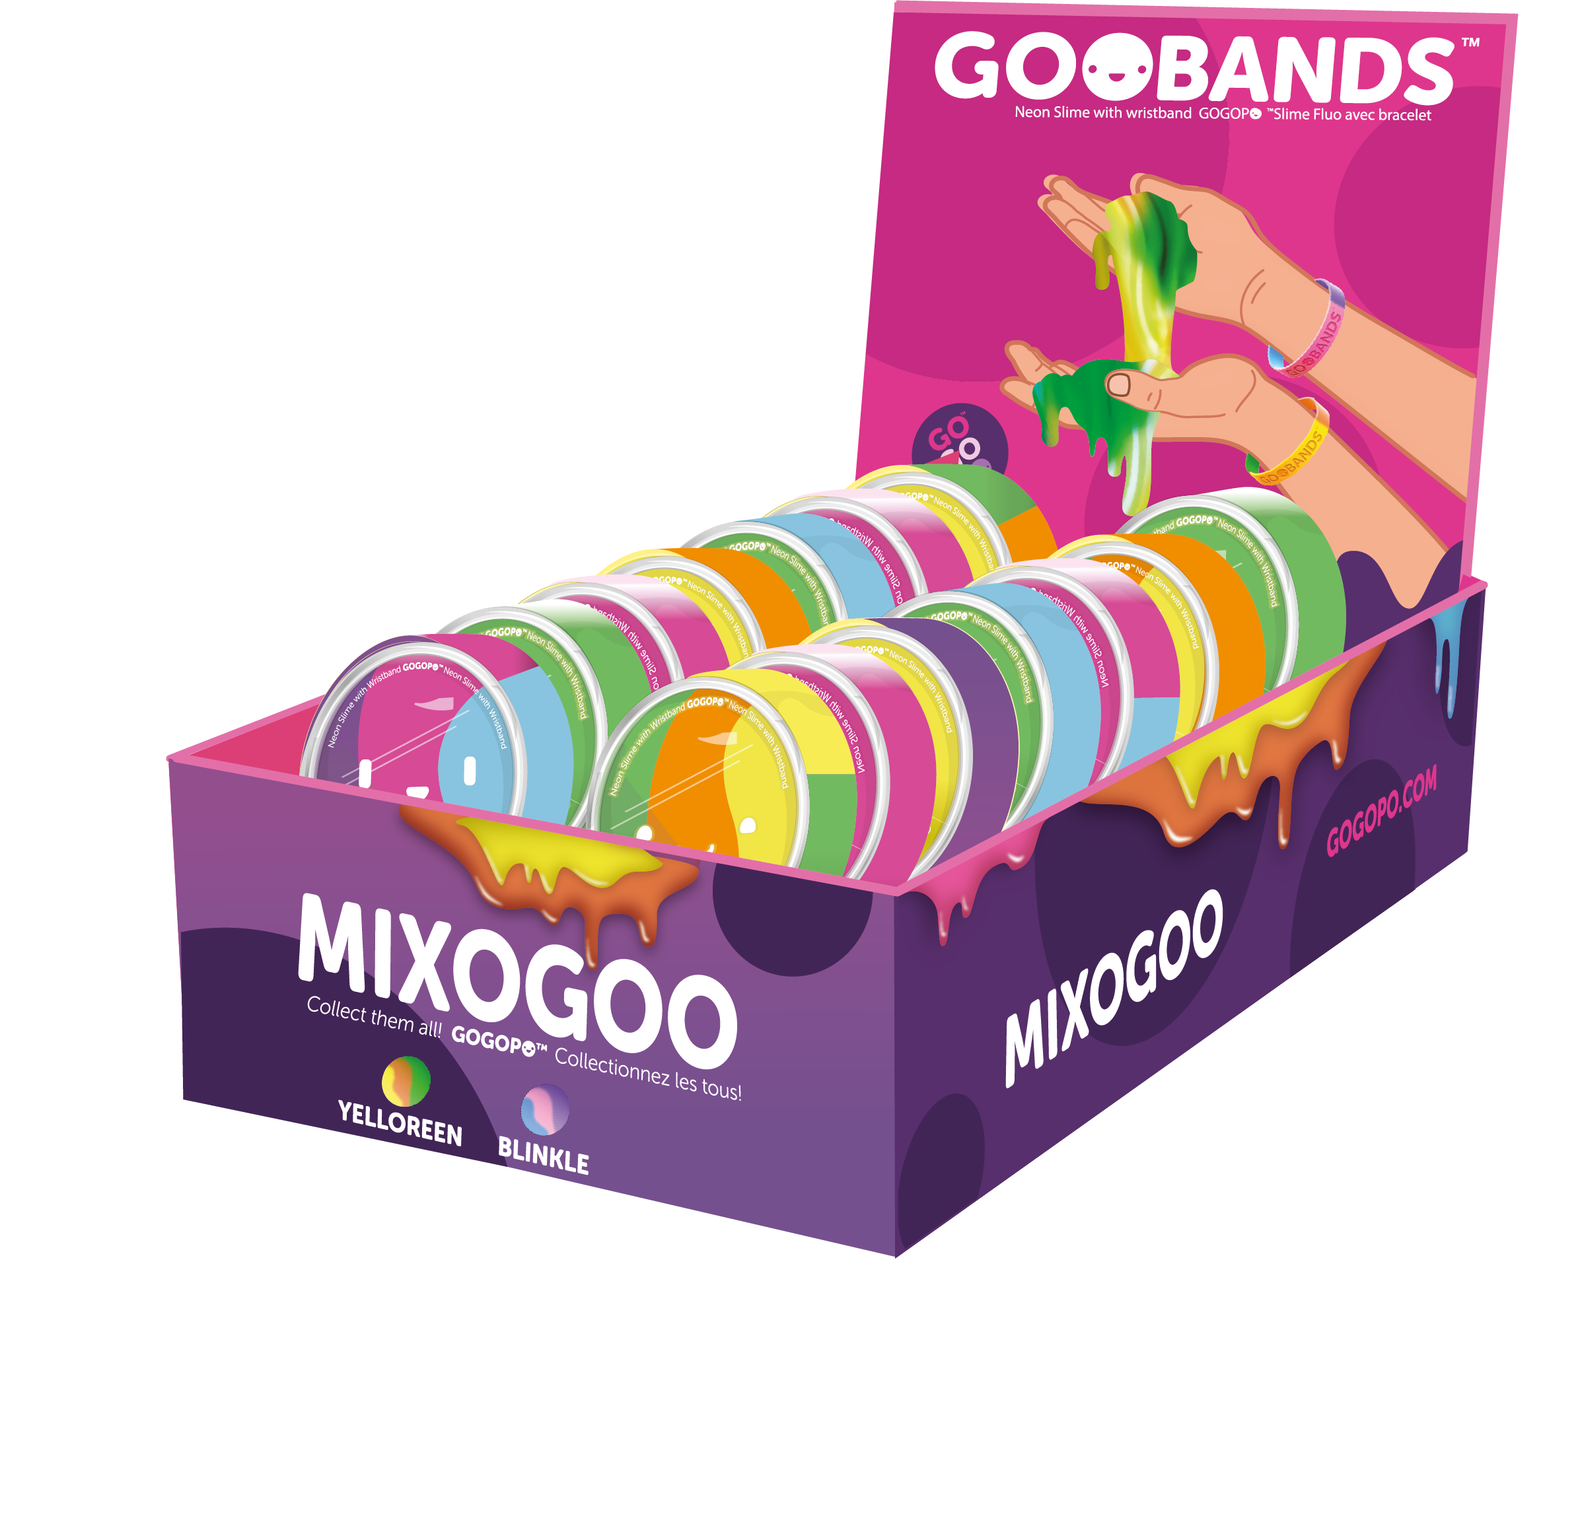 Goobands Mixagoo Slime With Wristbands